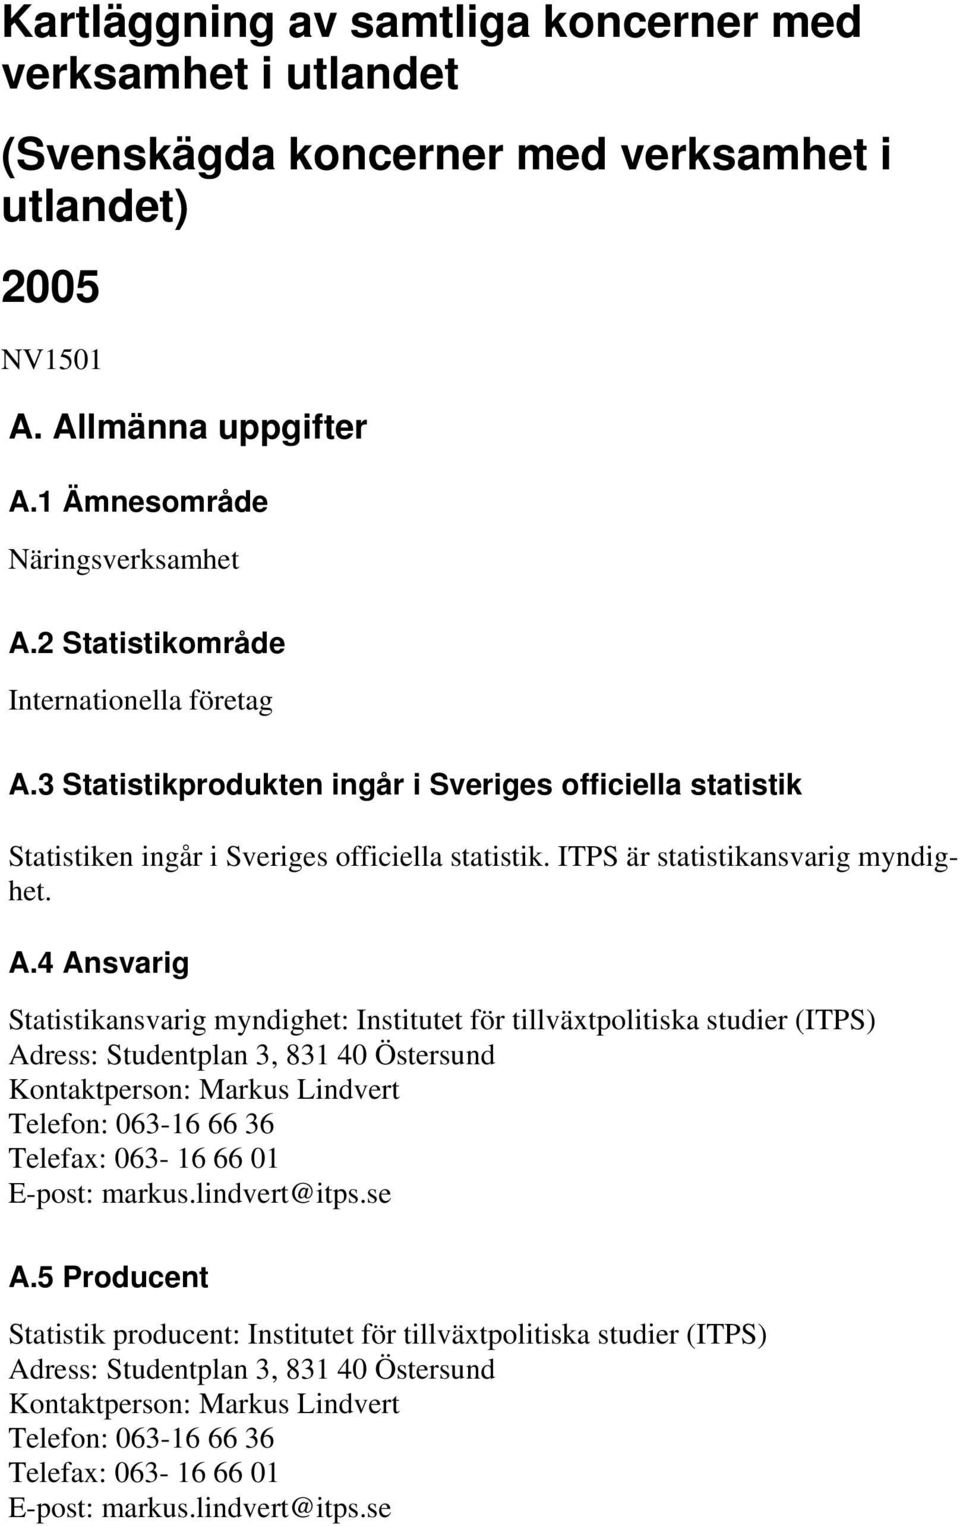 3 Statistikprodukten ingår i Sveriges officiella statistik Statistiken ingår i Sveriges officiella statistik. ITPS är statistikansvarig myndighet. A.